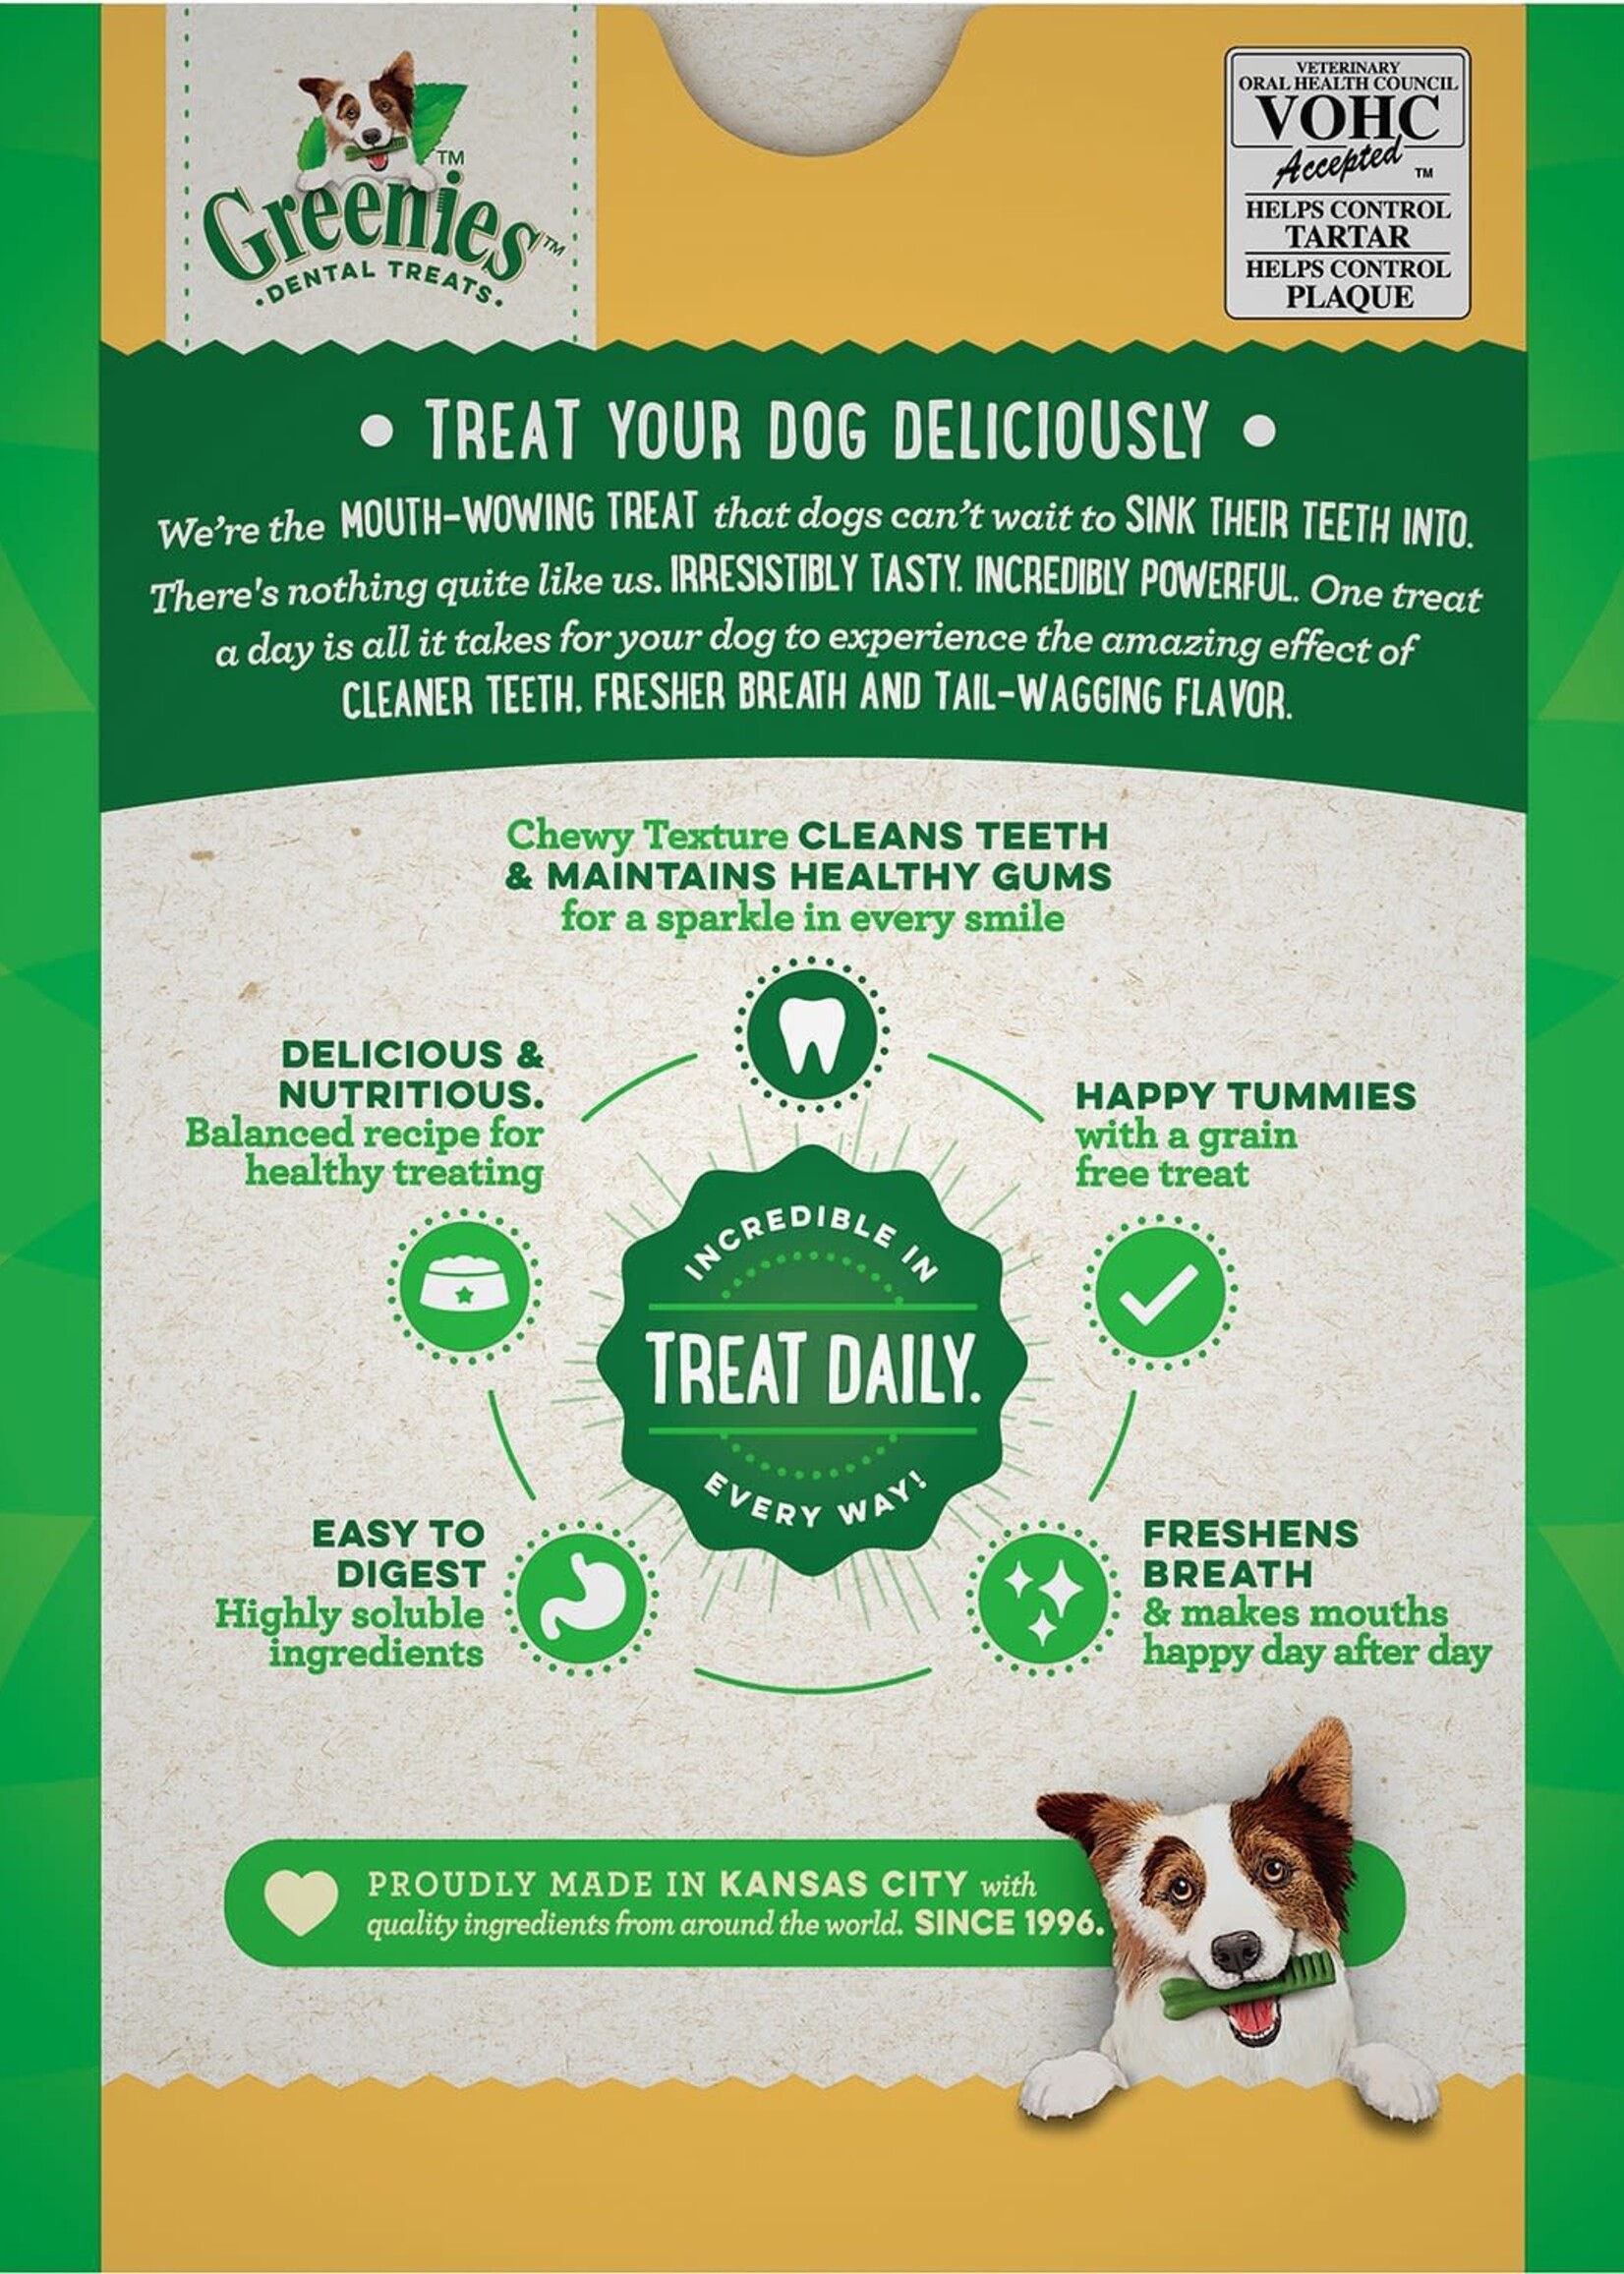 GREENIES GREENIES Grain-Free Regular Dental Dog Chew Treats